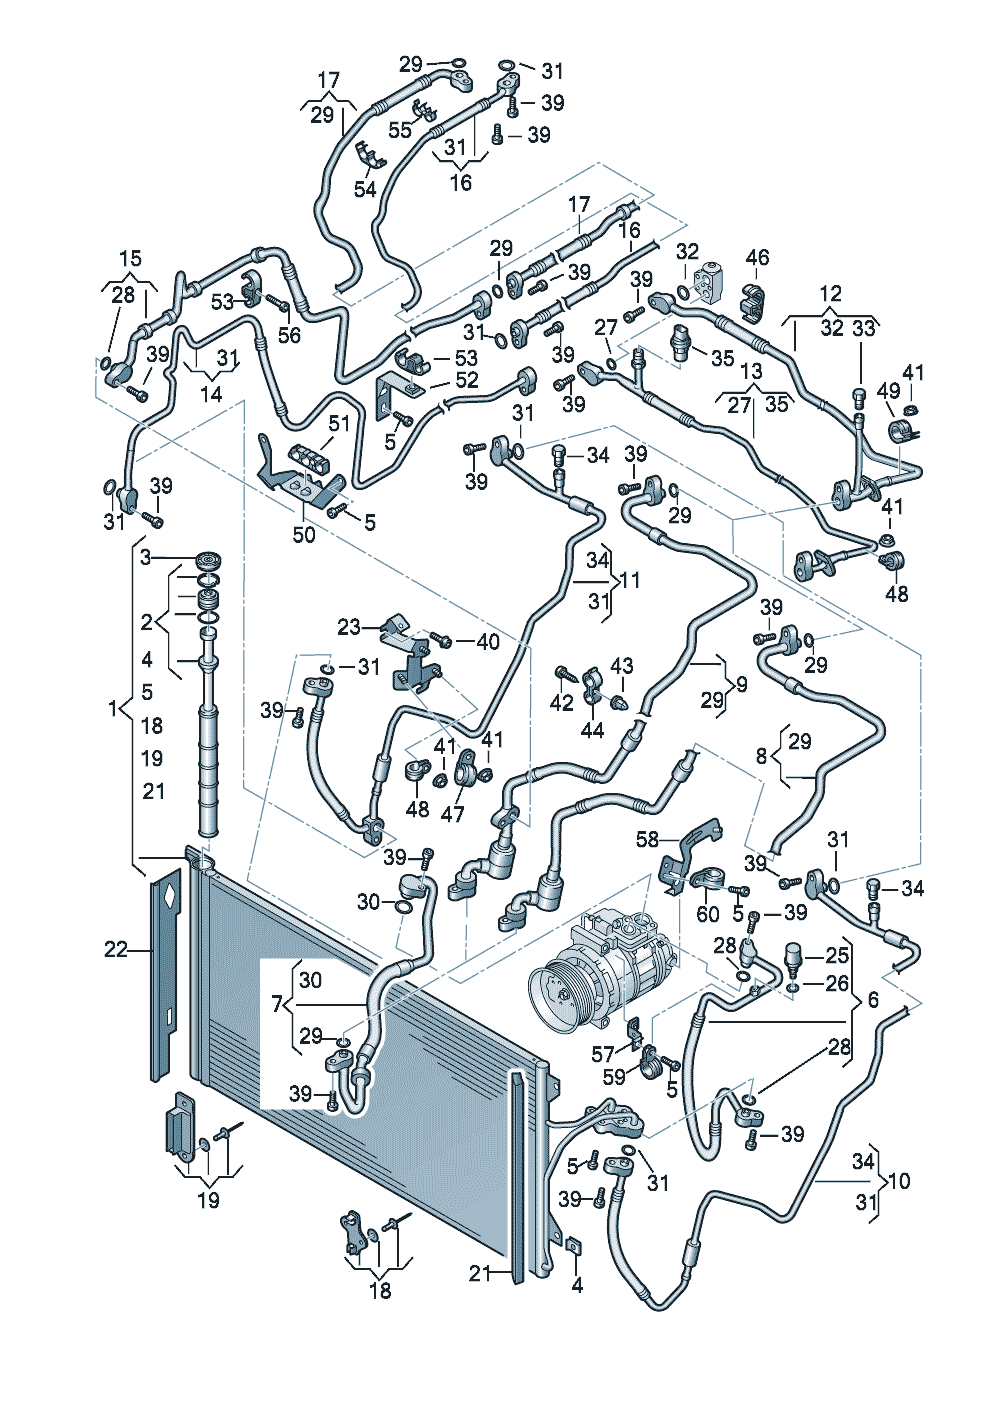 circuit de refrigerantCondenseur de climatiseur avec<br>reservoir de refrigerant 3,0l - Audi Q7 - aq7